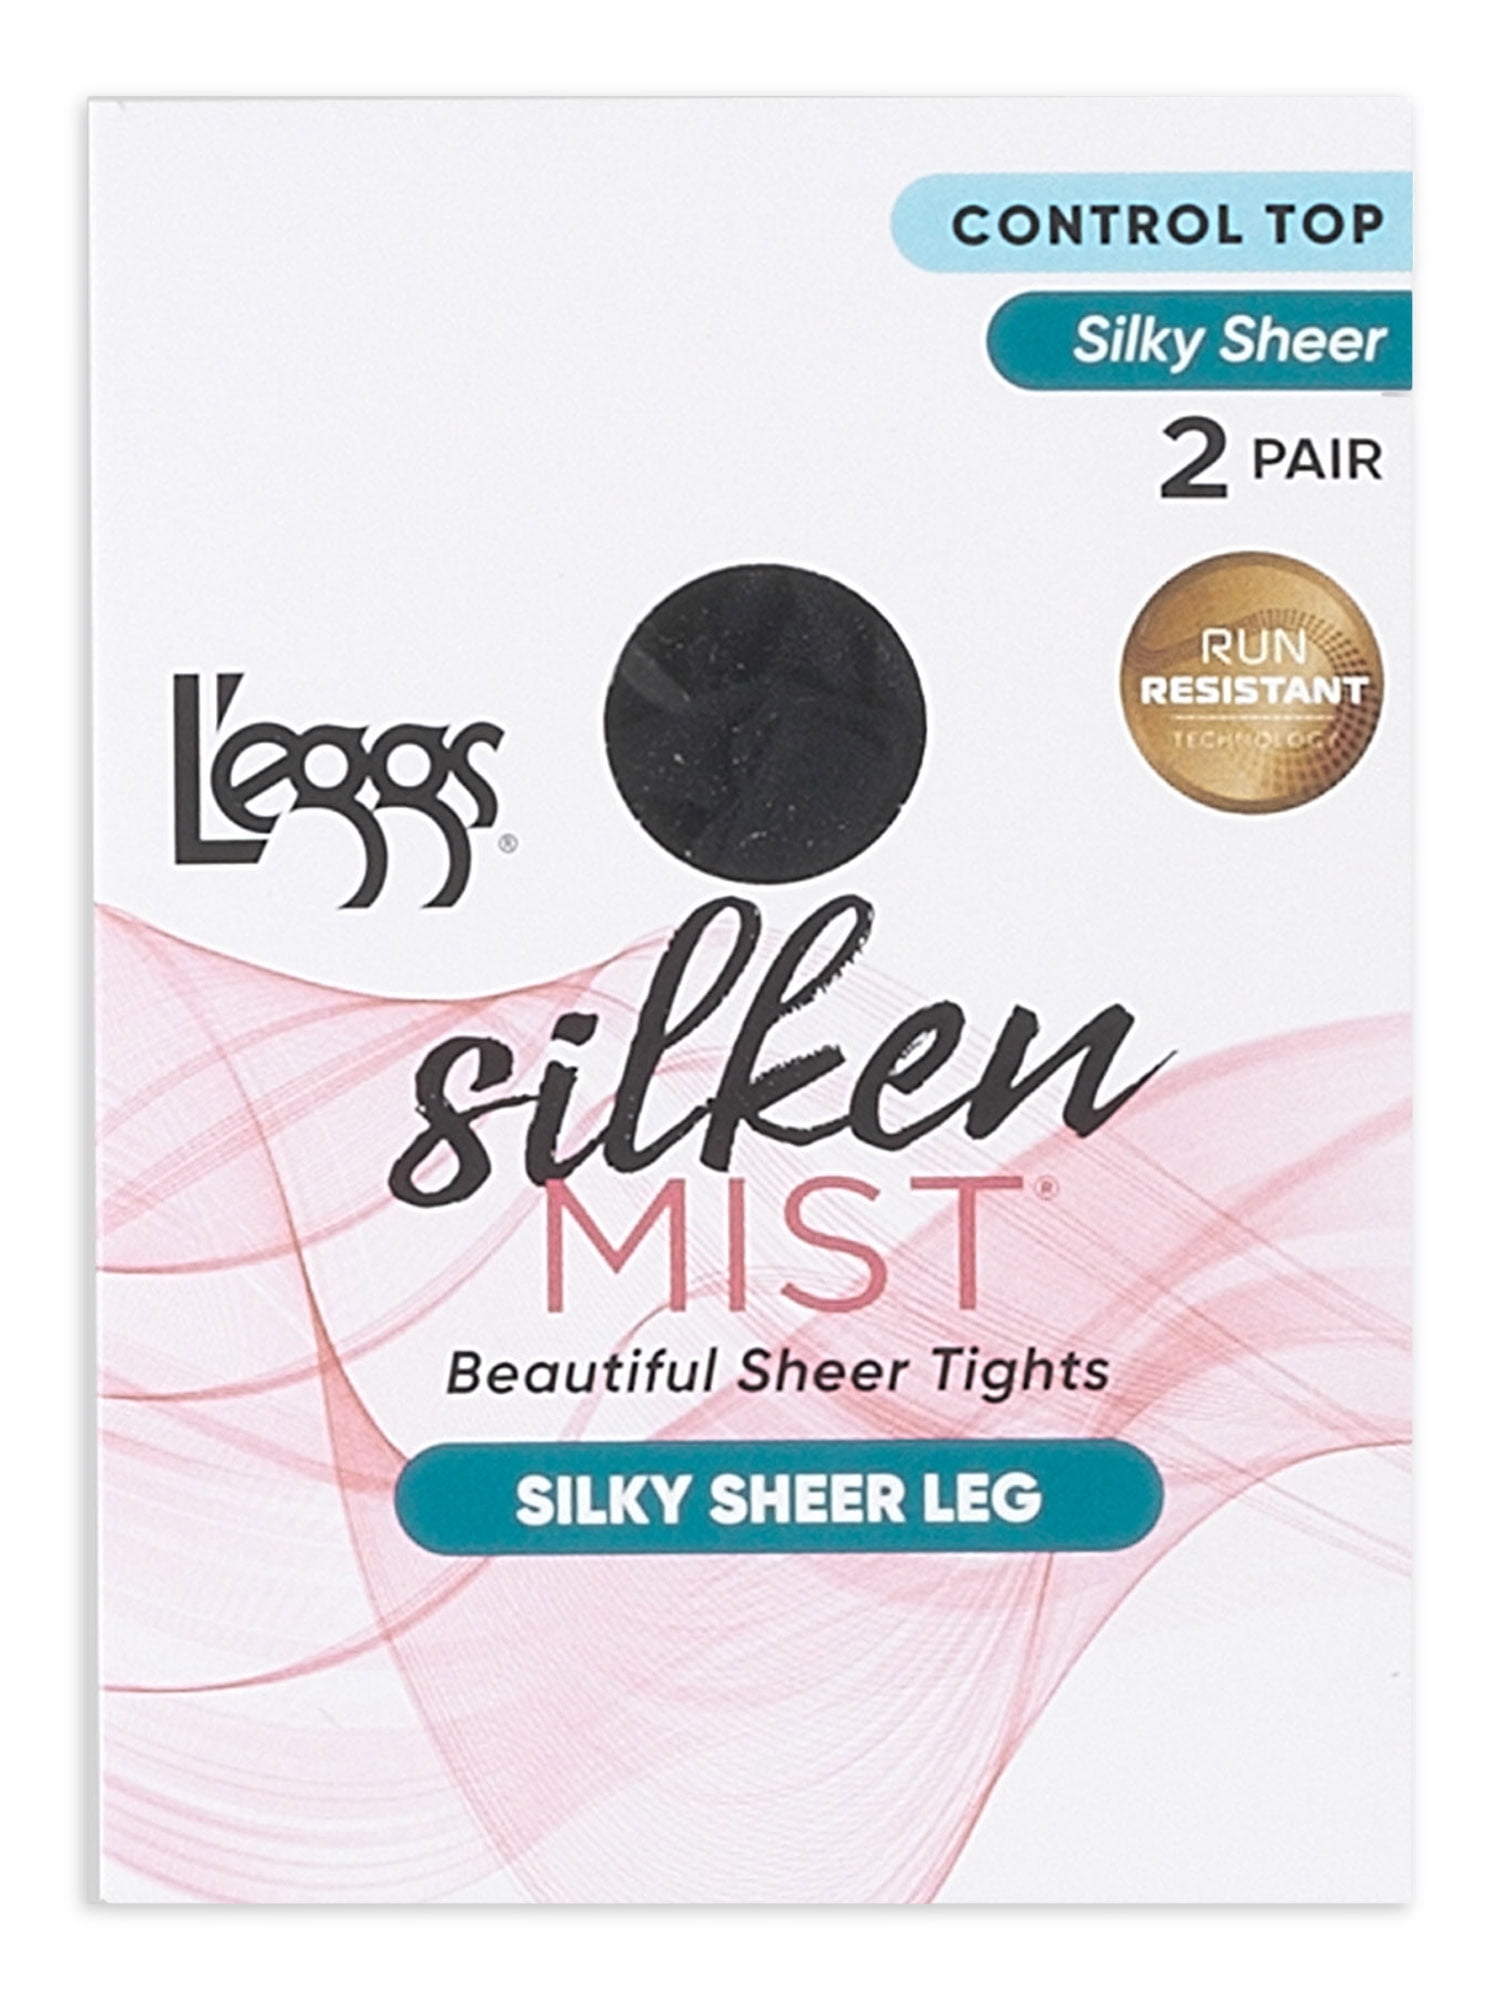 L'eggs Silken Mist Beautiful Sheer Tights Silky Sheer Leg, Control Top,  Suntan, Size Q, 1 pair - ShopRite